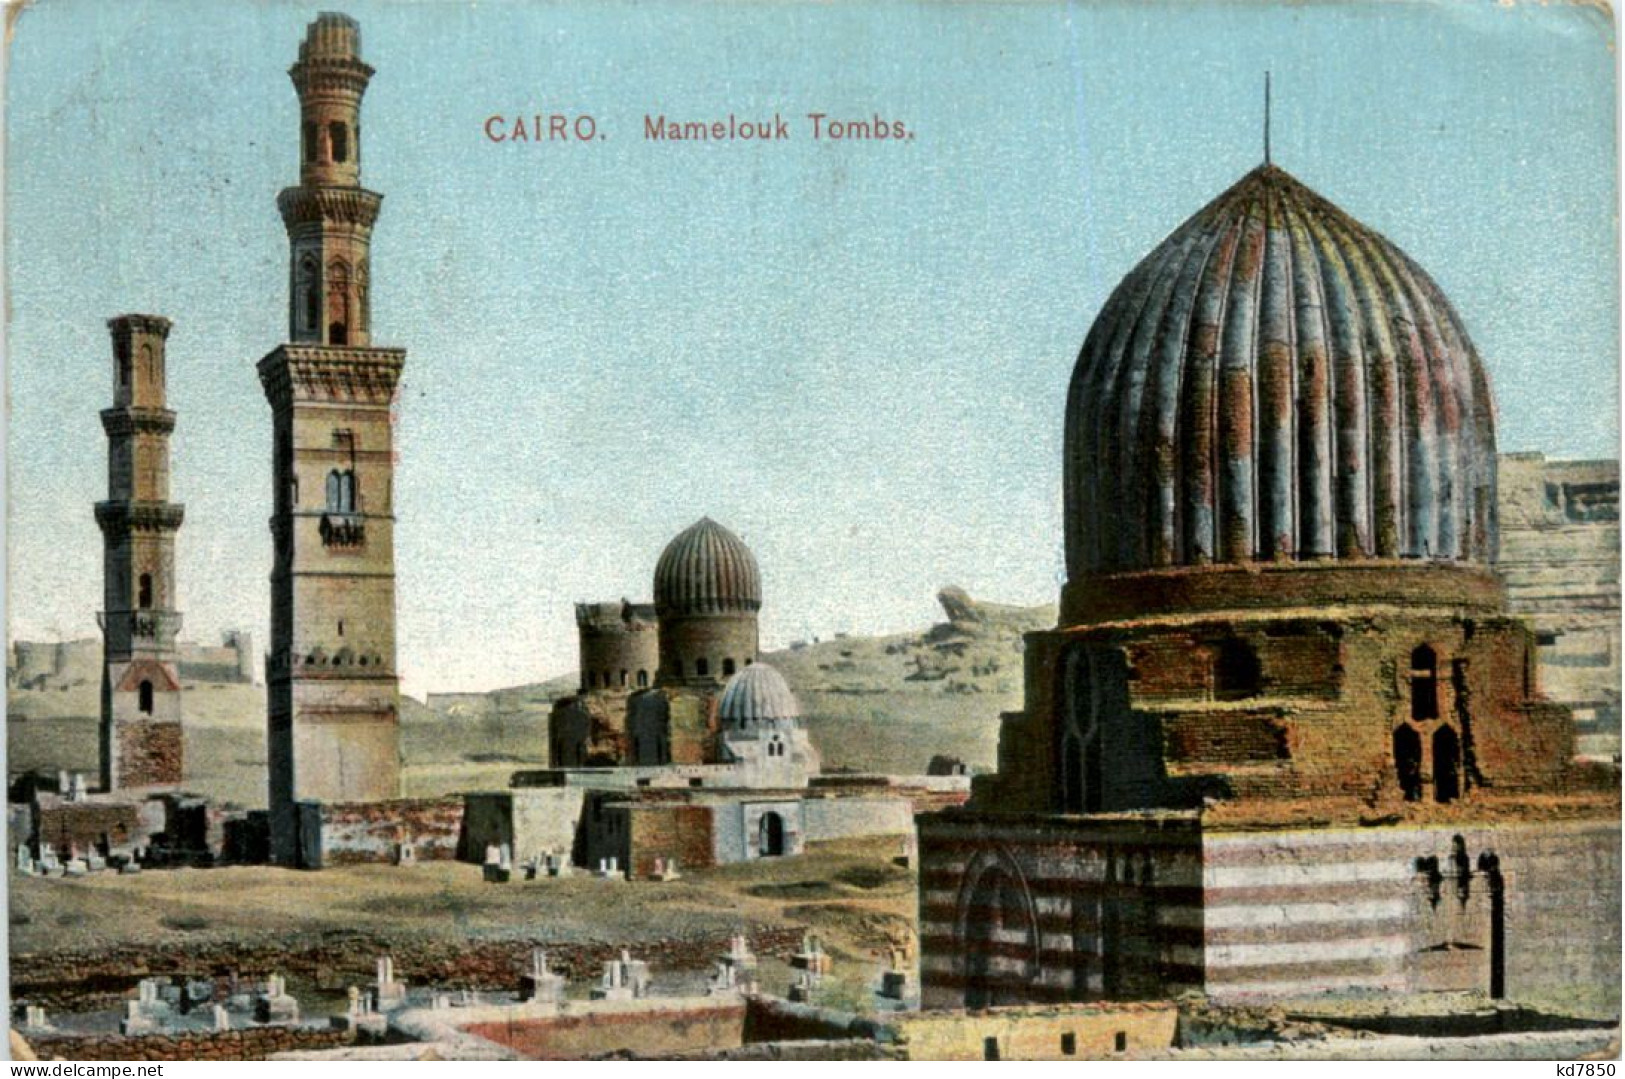 Cairo - Mamelouk Tombs - Kairo